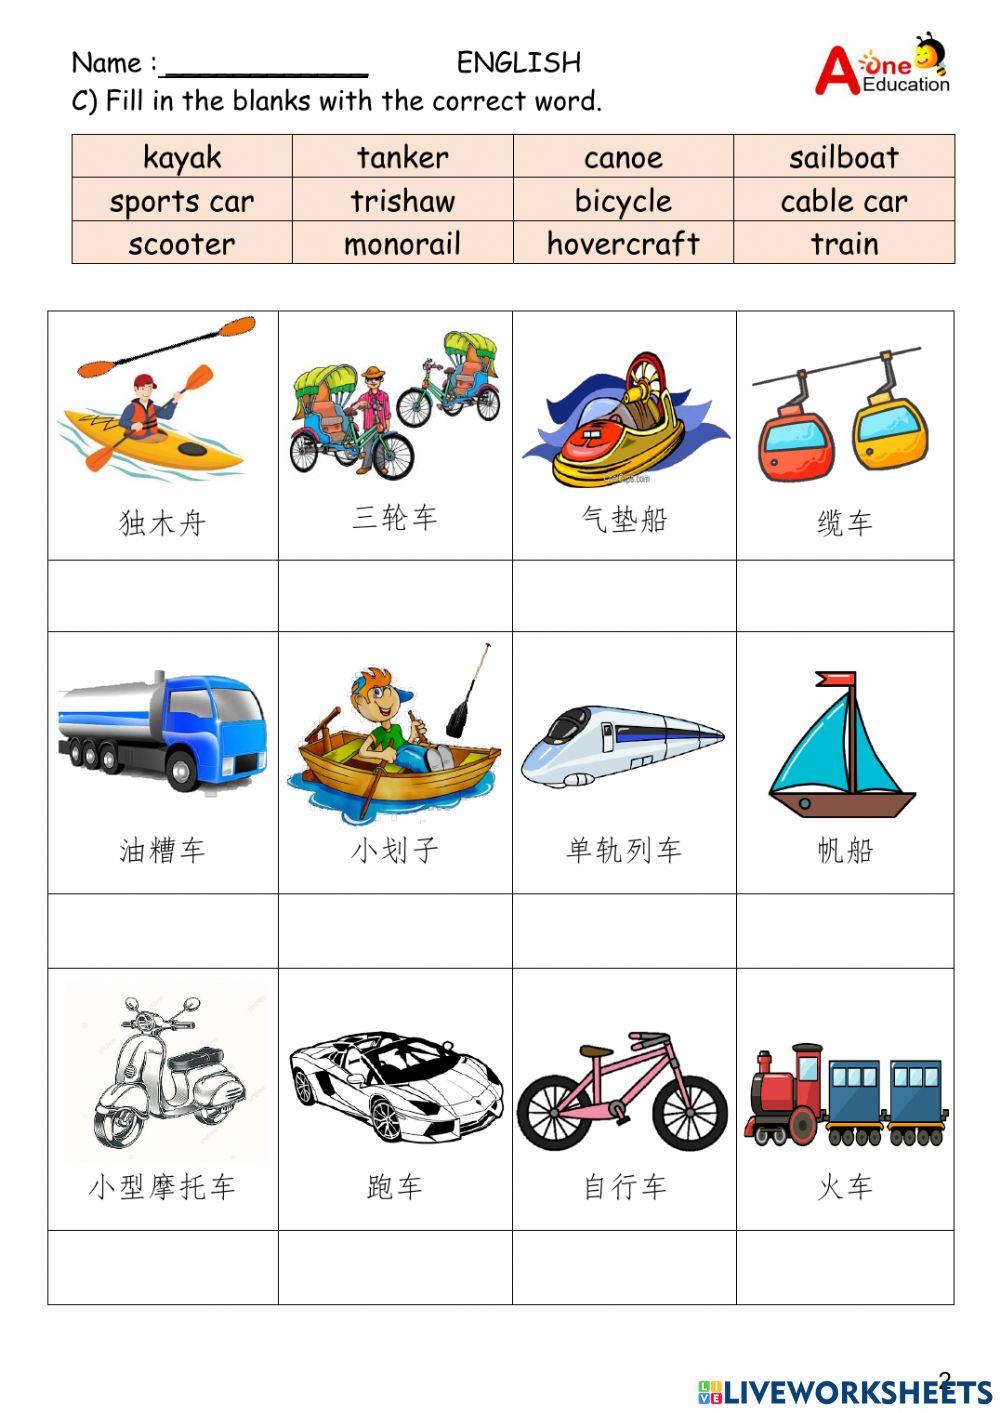 Vocabulary (Vehicles)